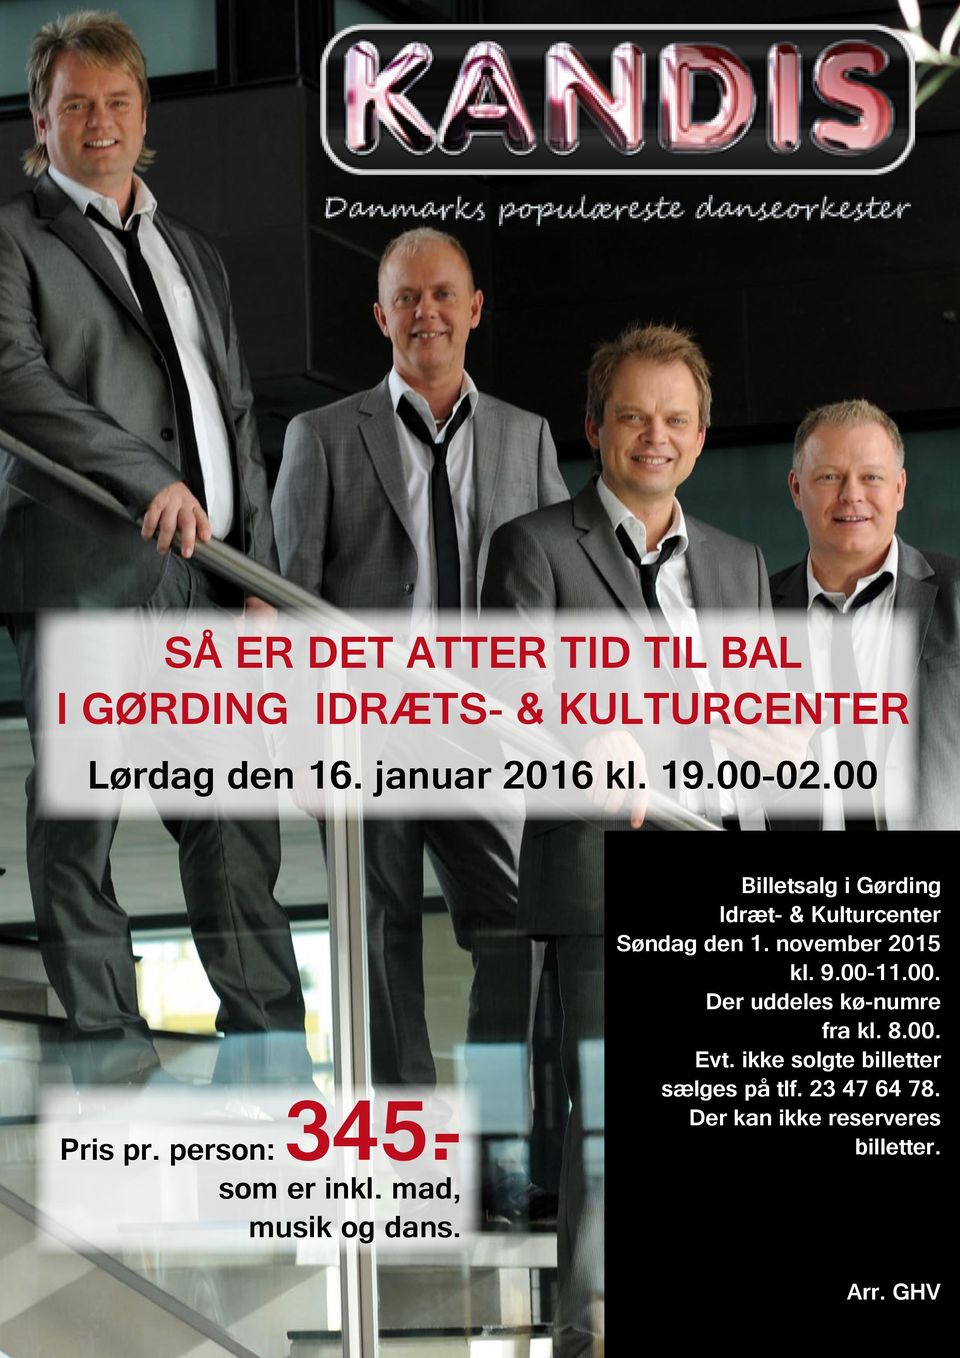 Billetsalg i Gørding Idræt- & Kulturcenter Søndag den 1. november 2015 kl. 9.00-